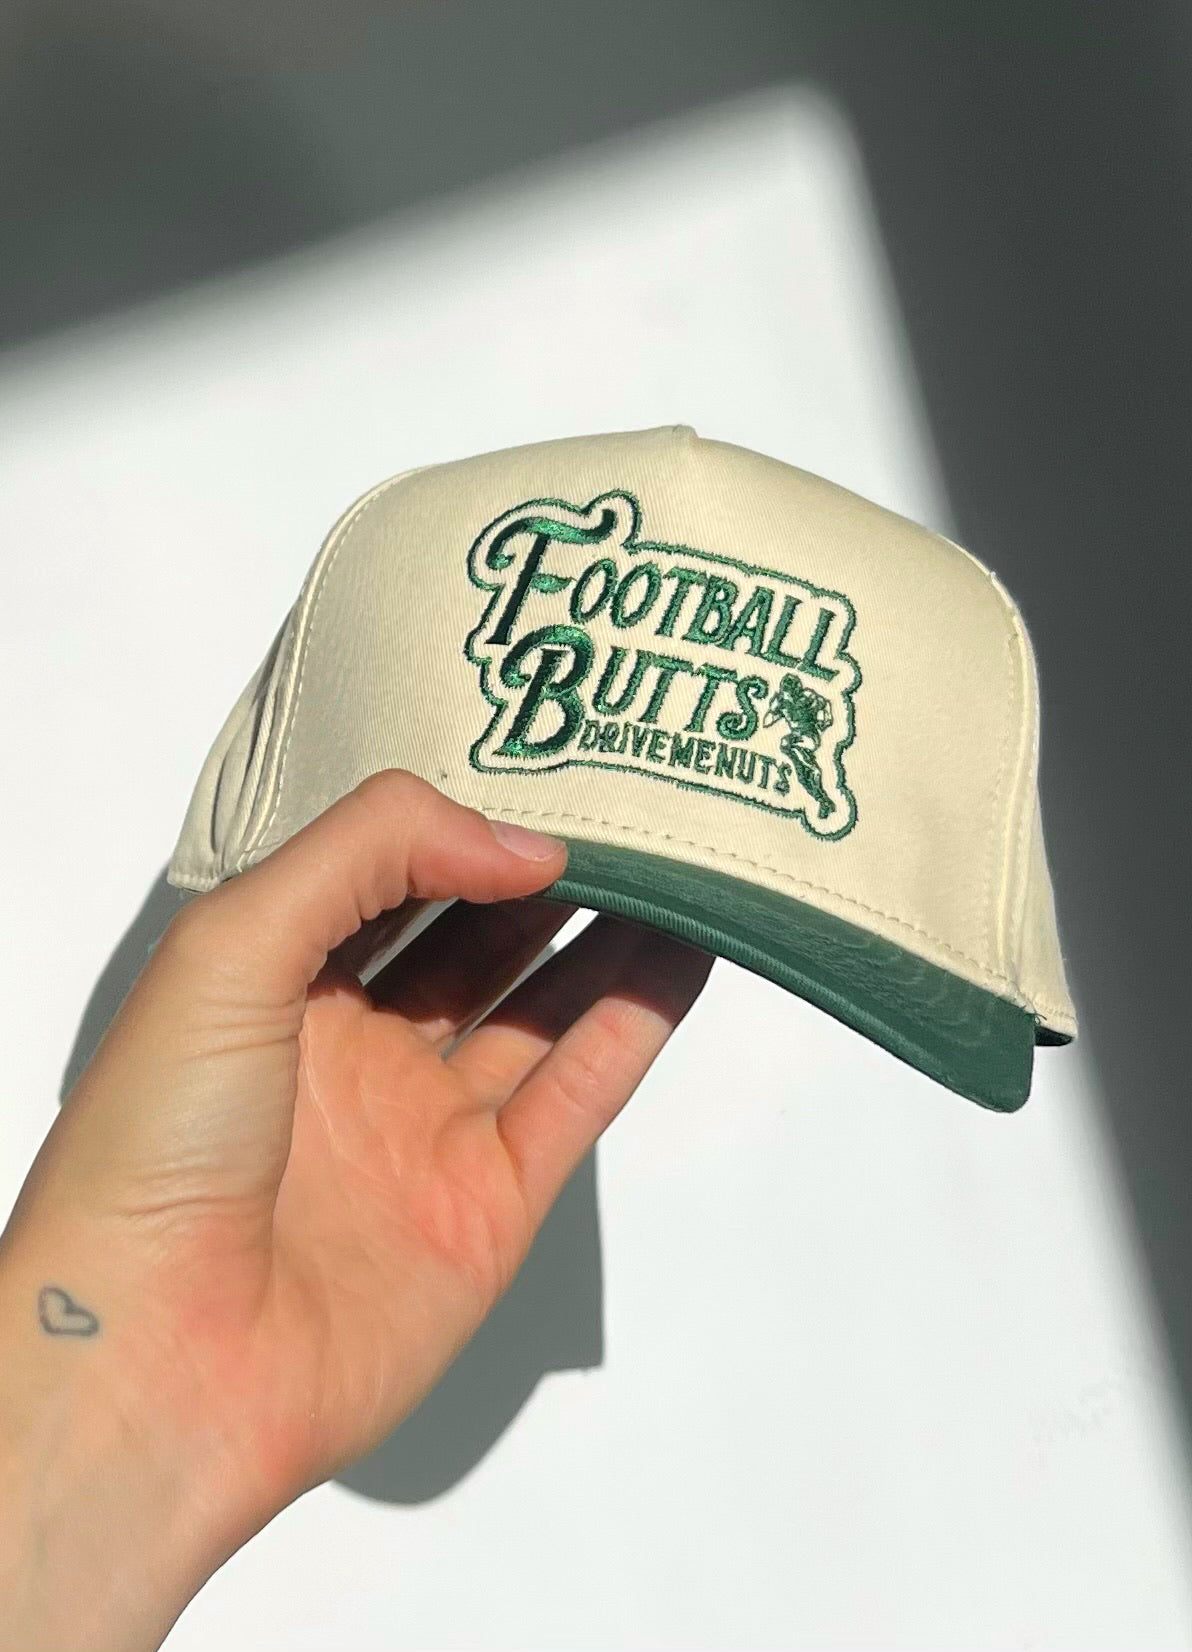 “Football Butts” Vintage Trucker Hat